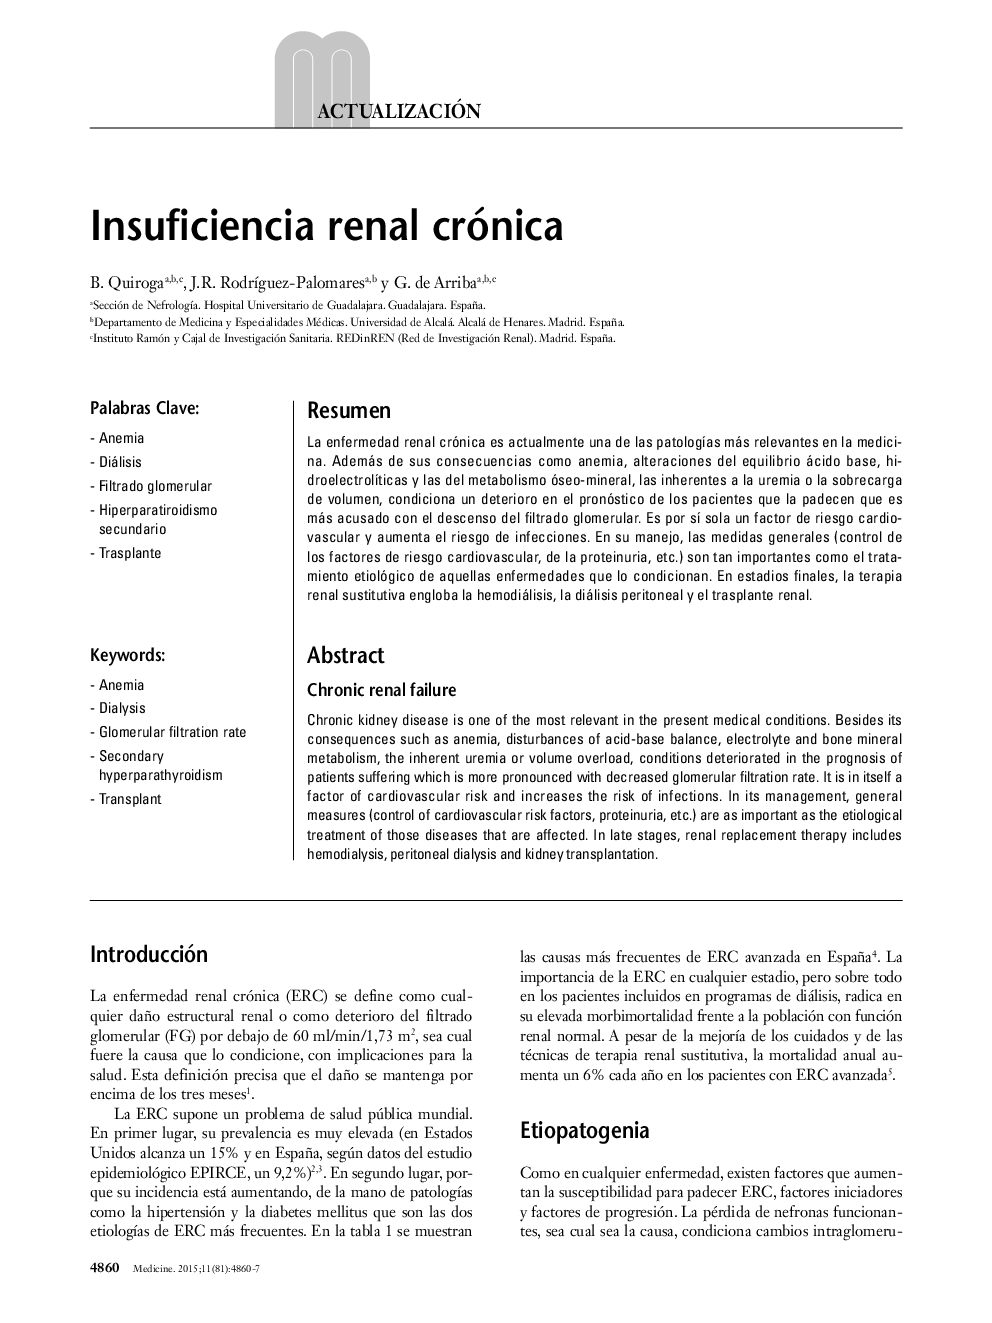 Insuficiencia renal crónica